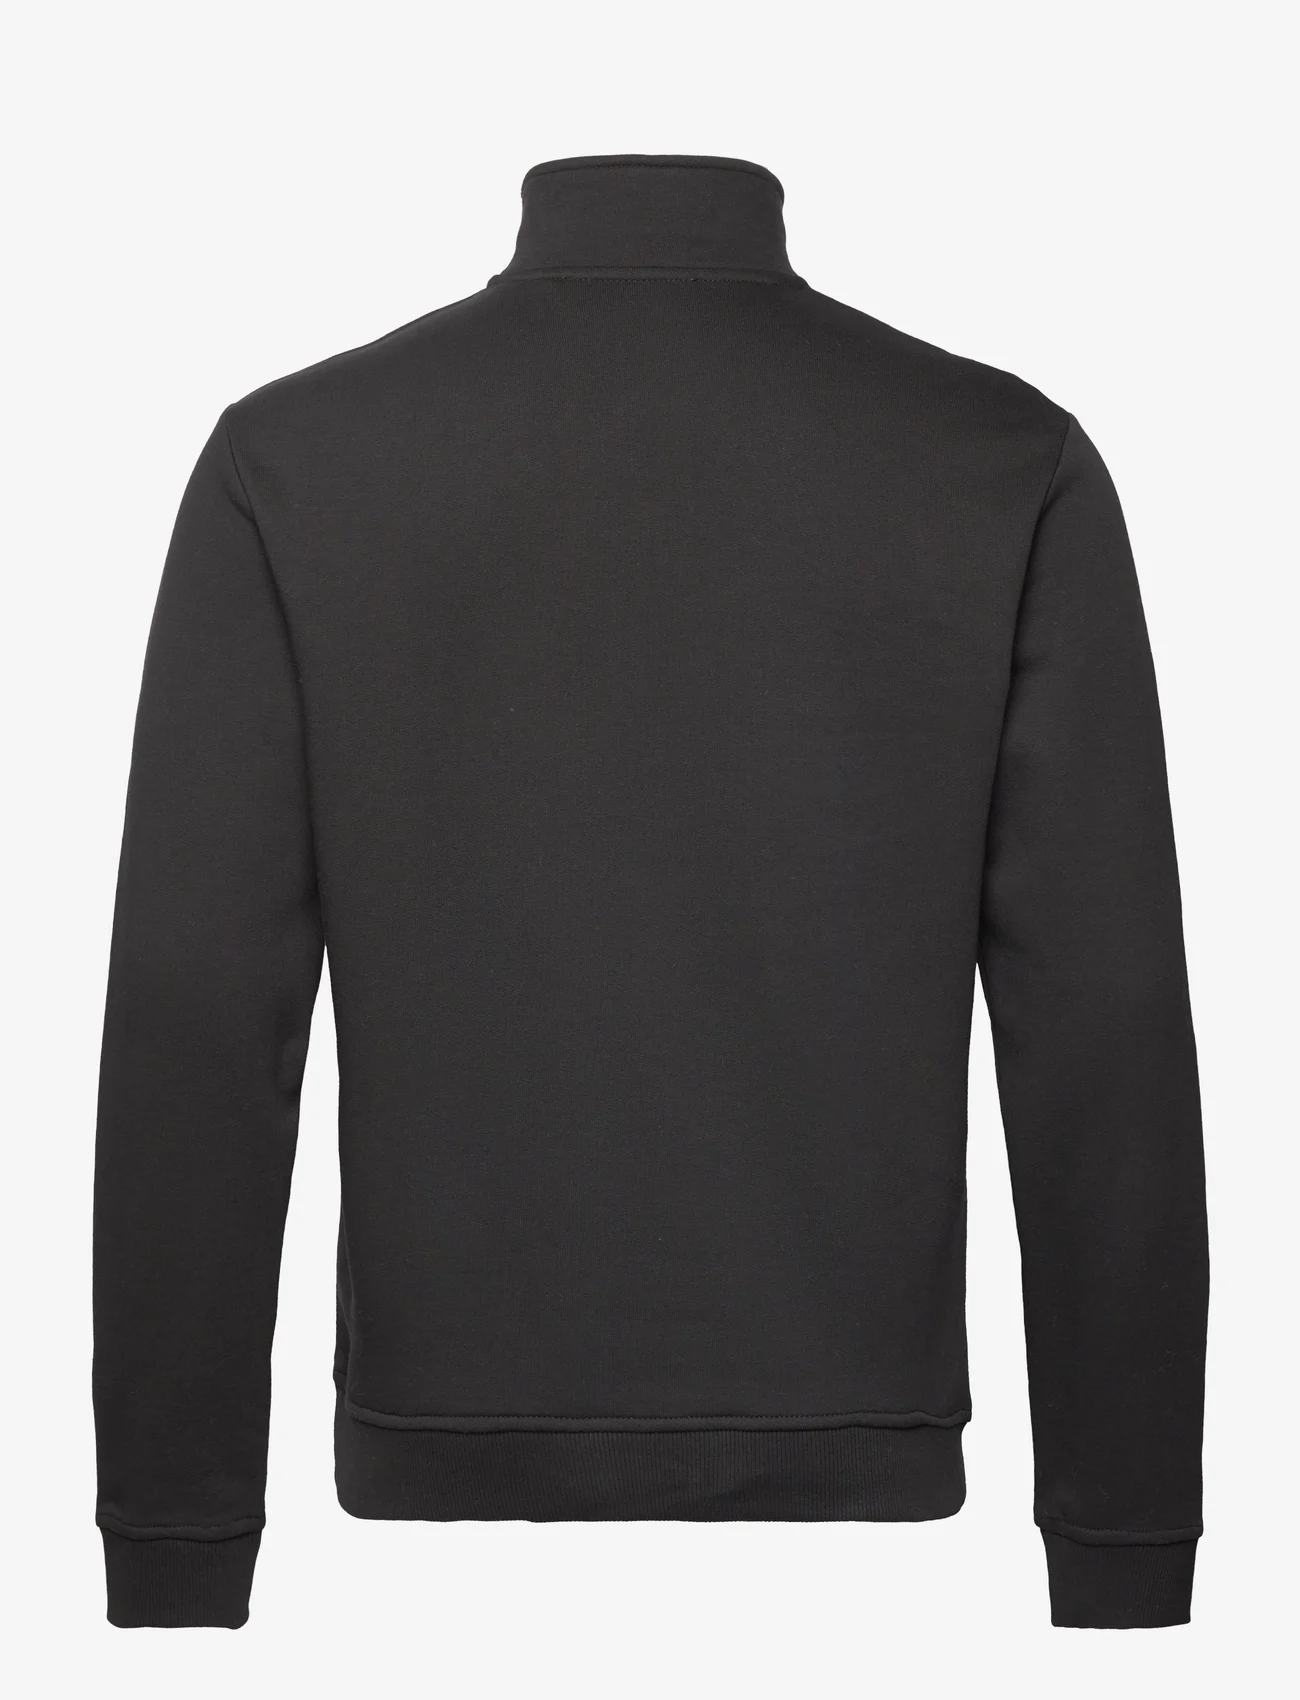 Les Deux - Les Deux II Half-Zip Sweatshirt 2.0 - sweatshirts - black/platinum - 1